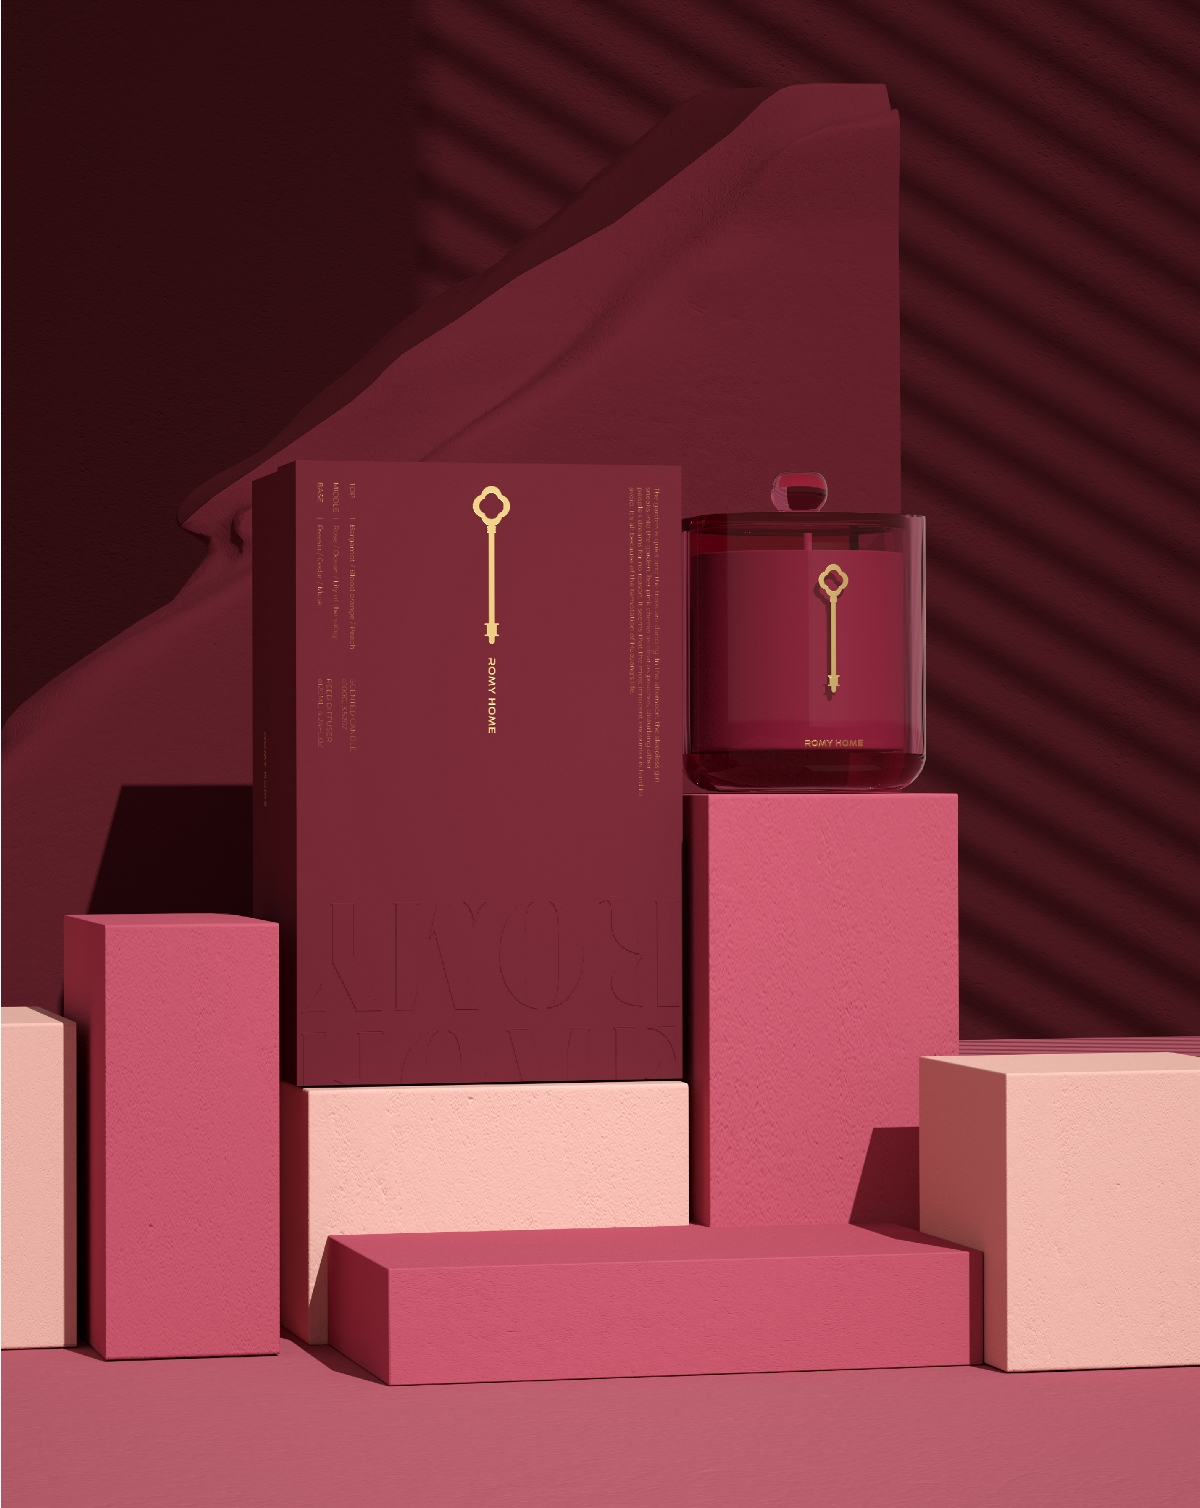 ROMY HOME | 香薰全案设计 香薰包装设计 品牌PR礼盒 品牌超级符号